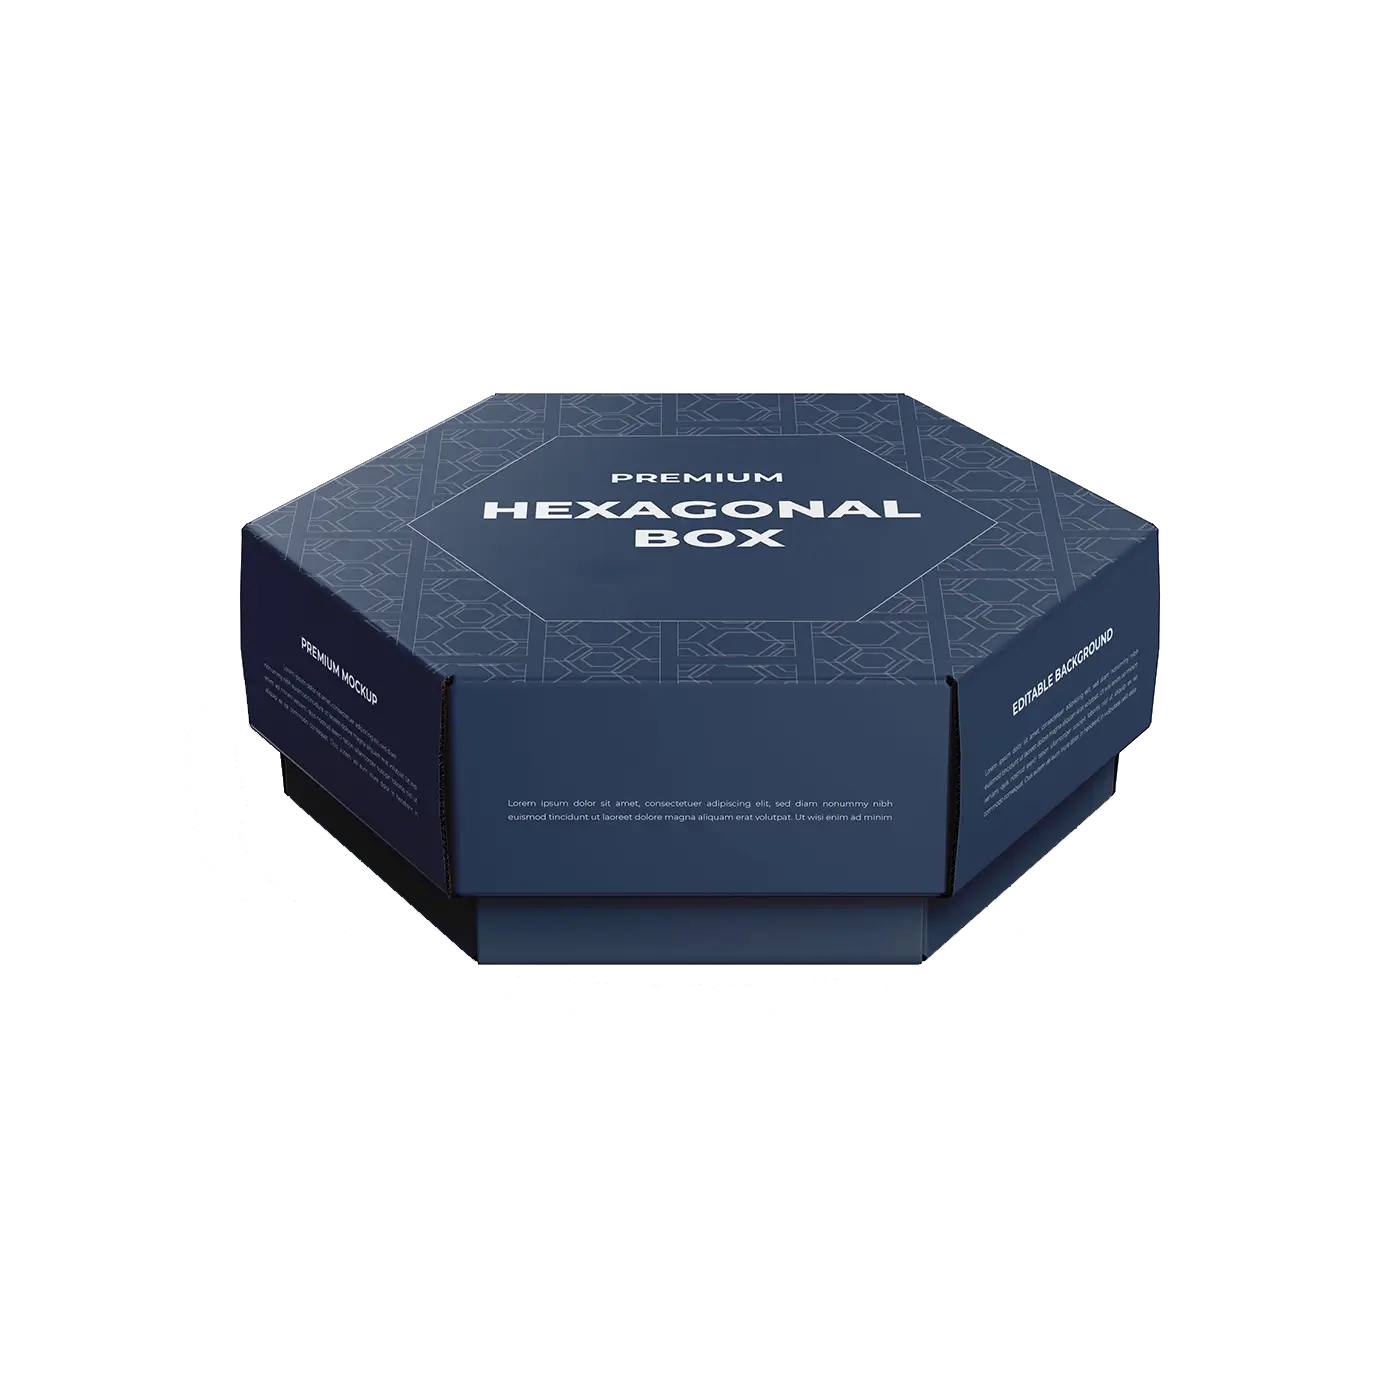 Custom Retail Packaging Custom Shaped Hexagonal Box Inspiration by qualitycustomboxes.com